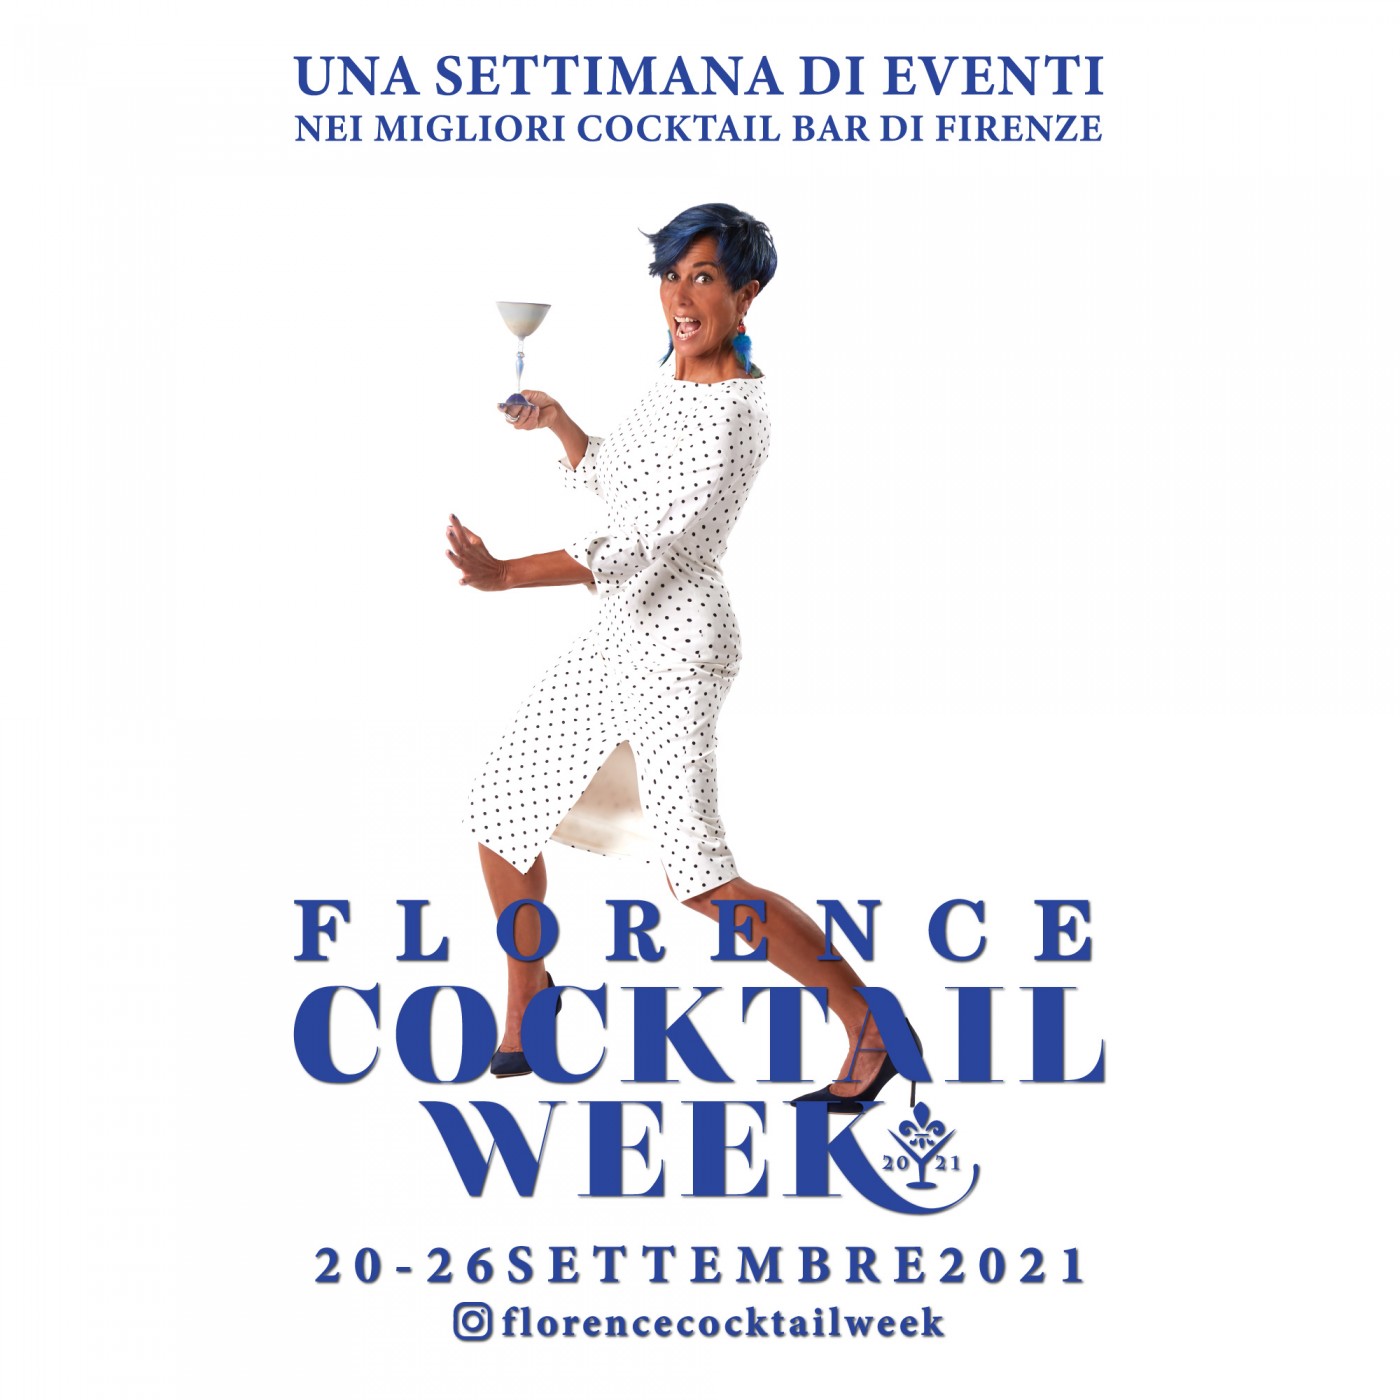 Florence Cocktail Week una settimana di eventi nei migliori cocktail